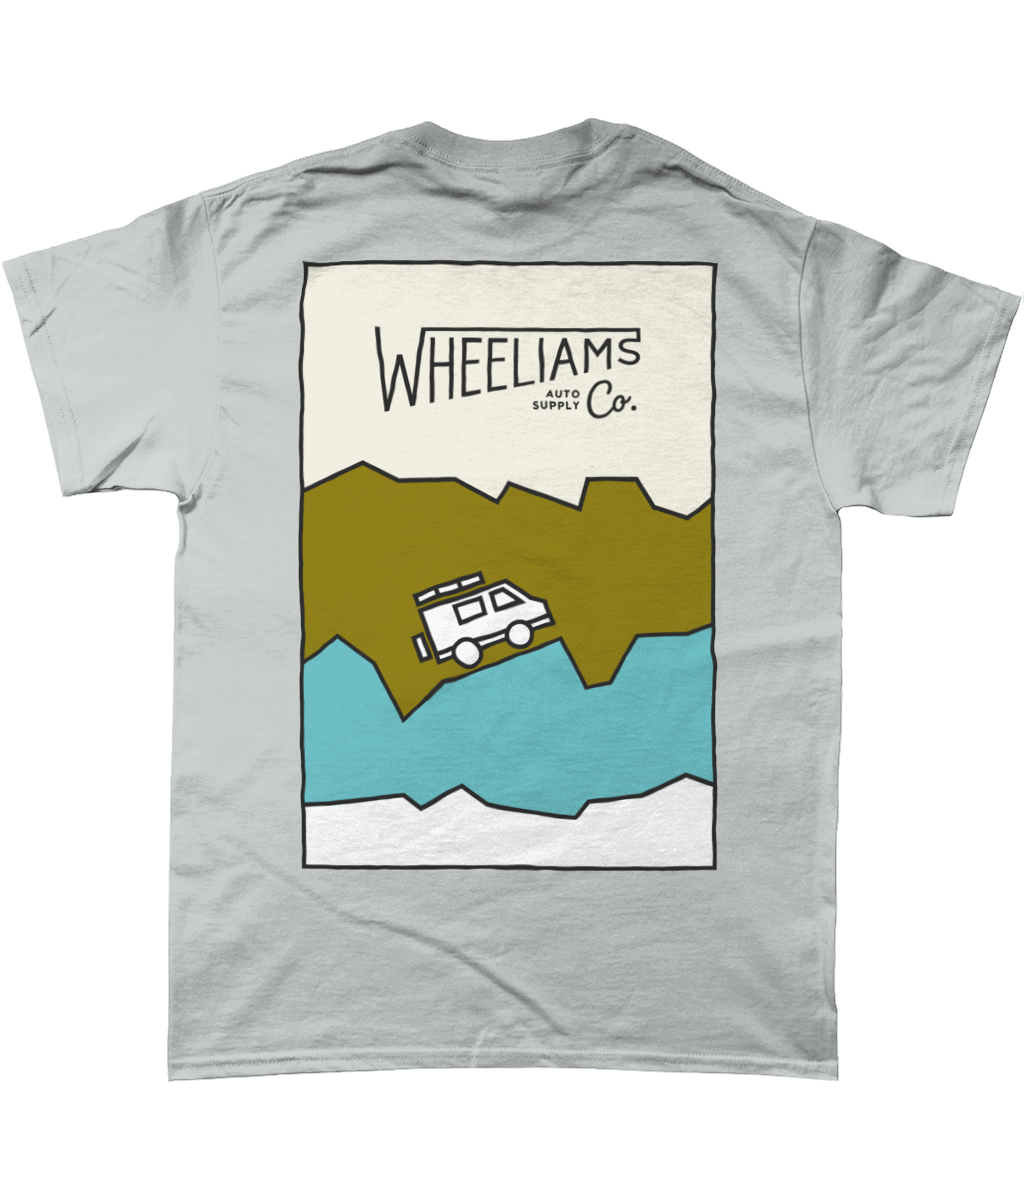 Wheeliams T Shirt